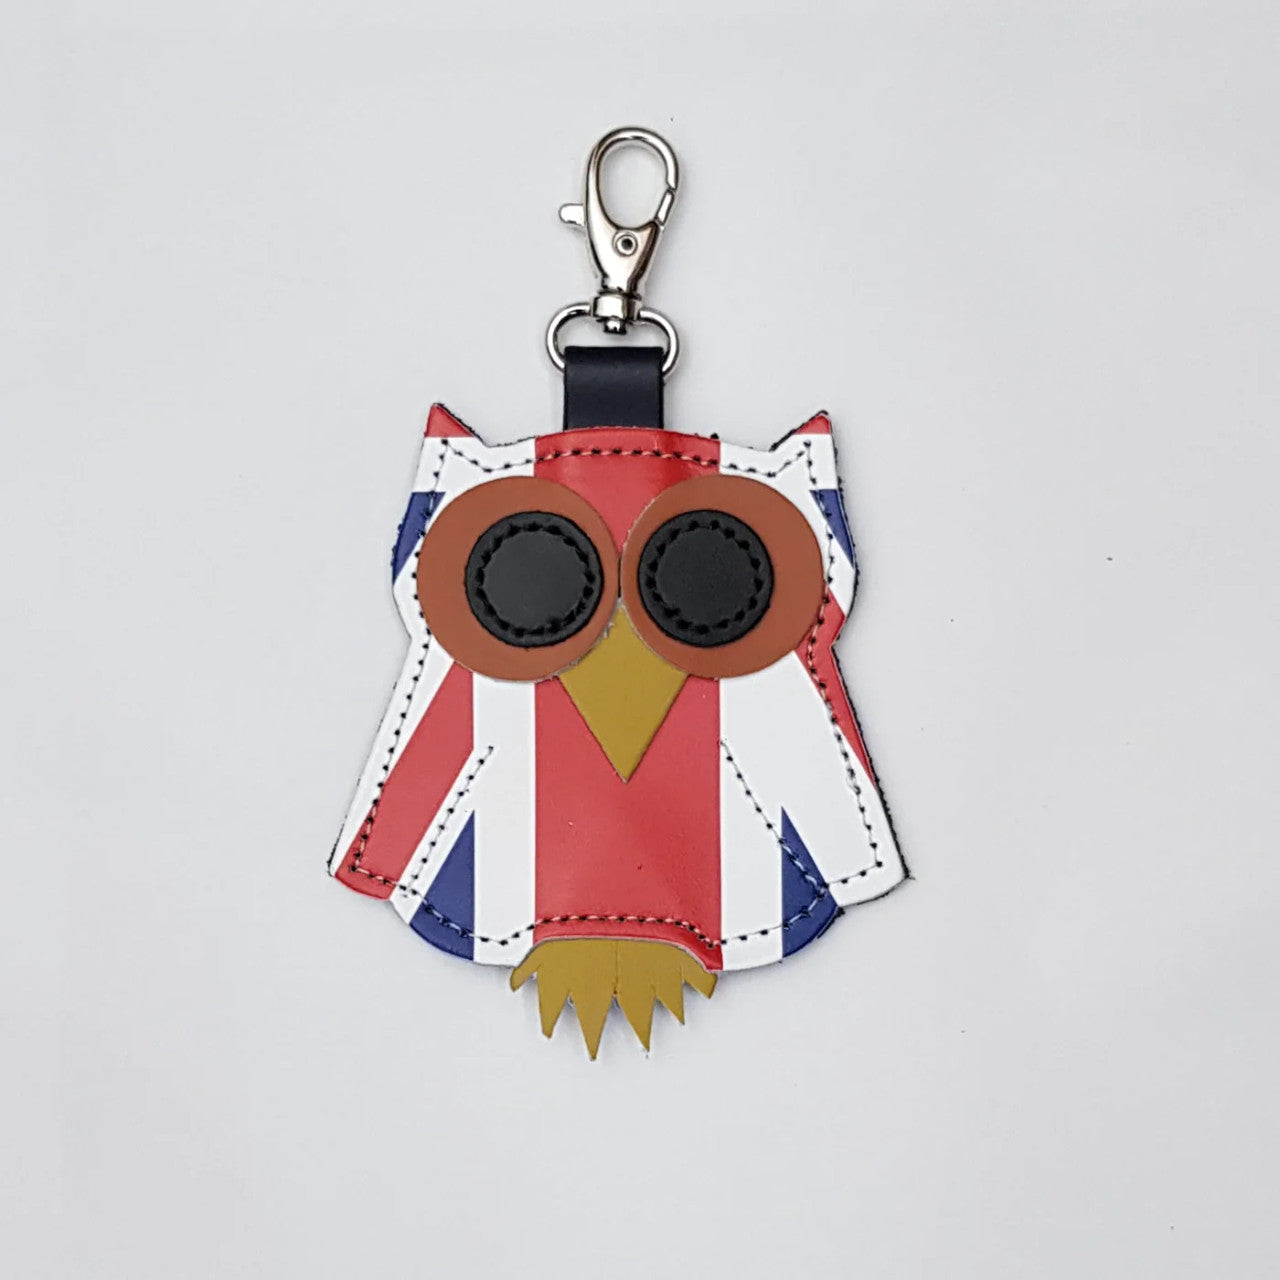 Leather Union Jack Owl Bag Charm by Zatchels.